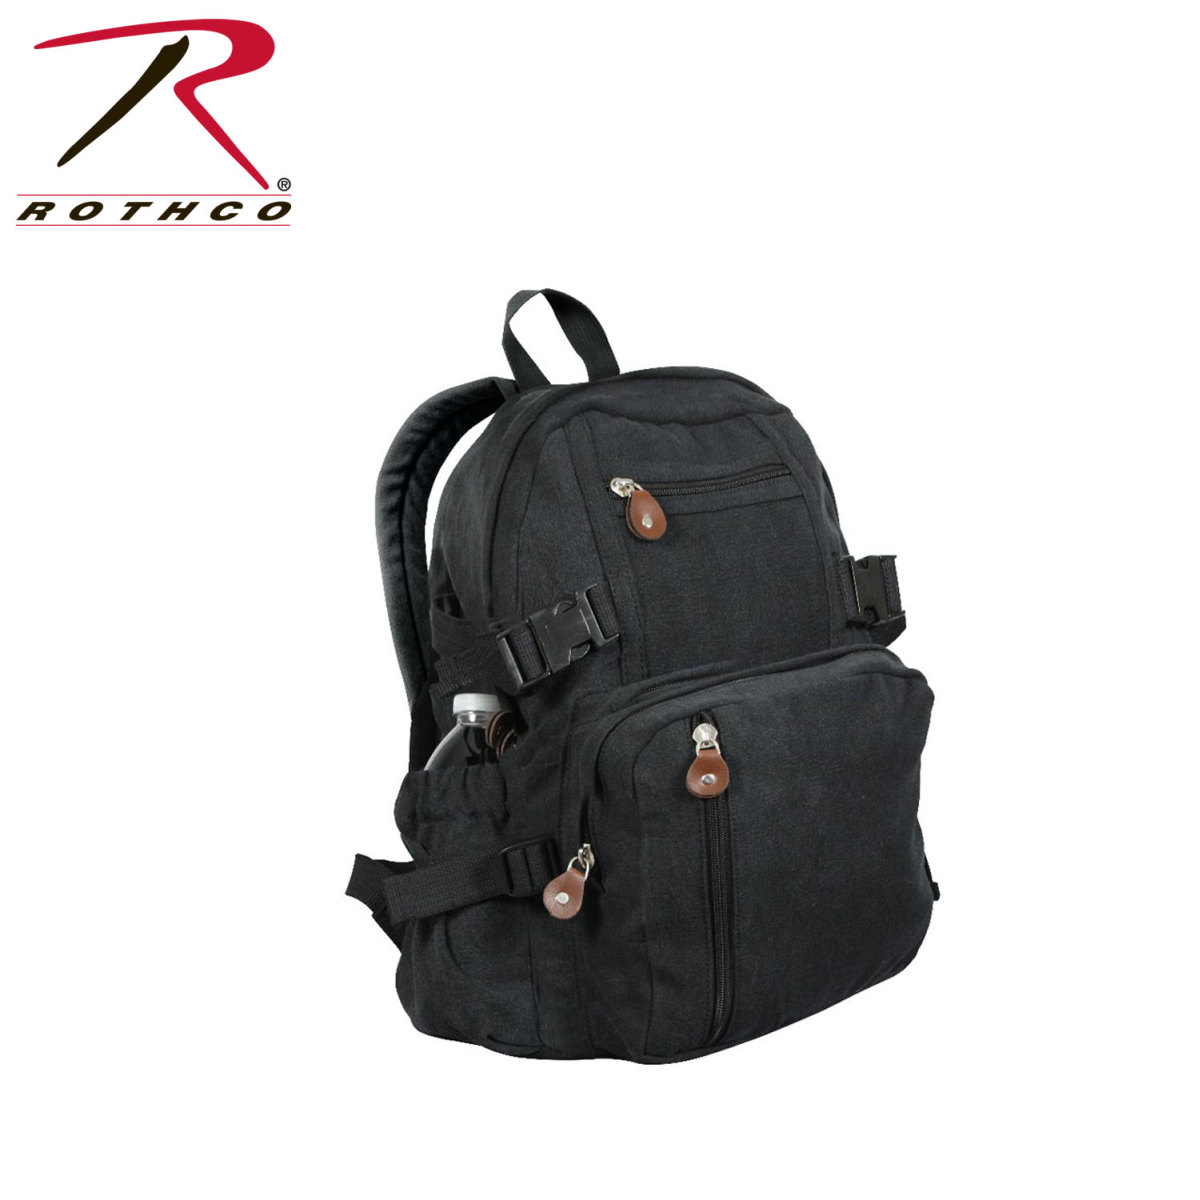 backpack black canvas mini size vintage look adjustable straps rothco 9153 